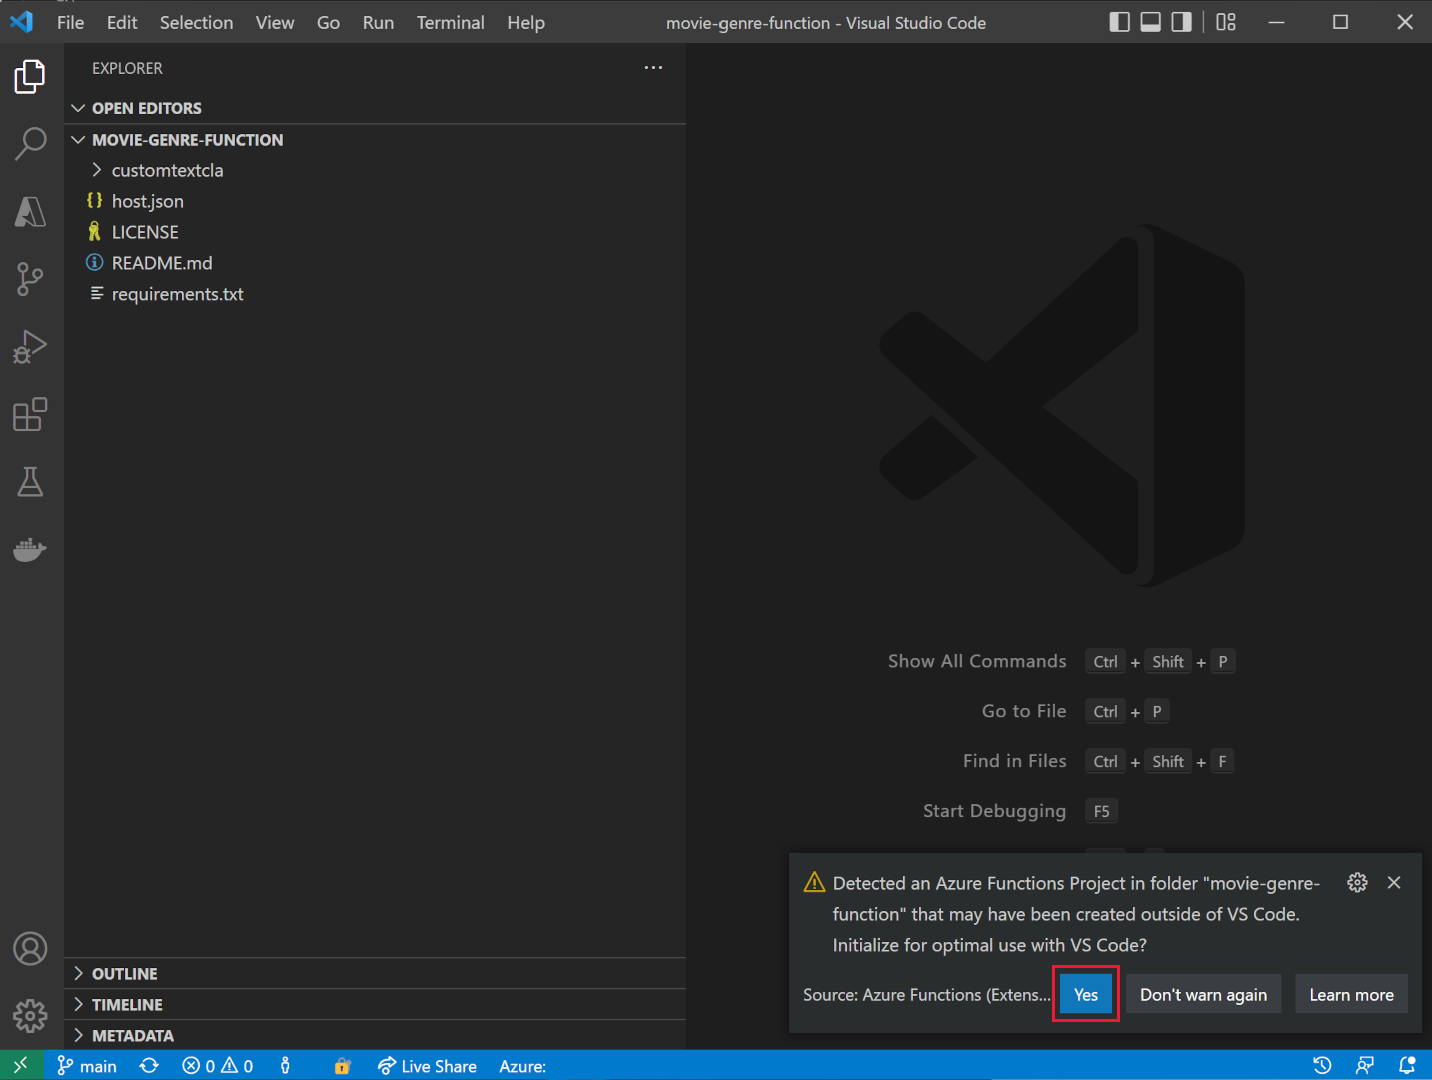 A screenshot of Visual Studio Code showing the optimize function app dialog.